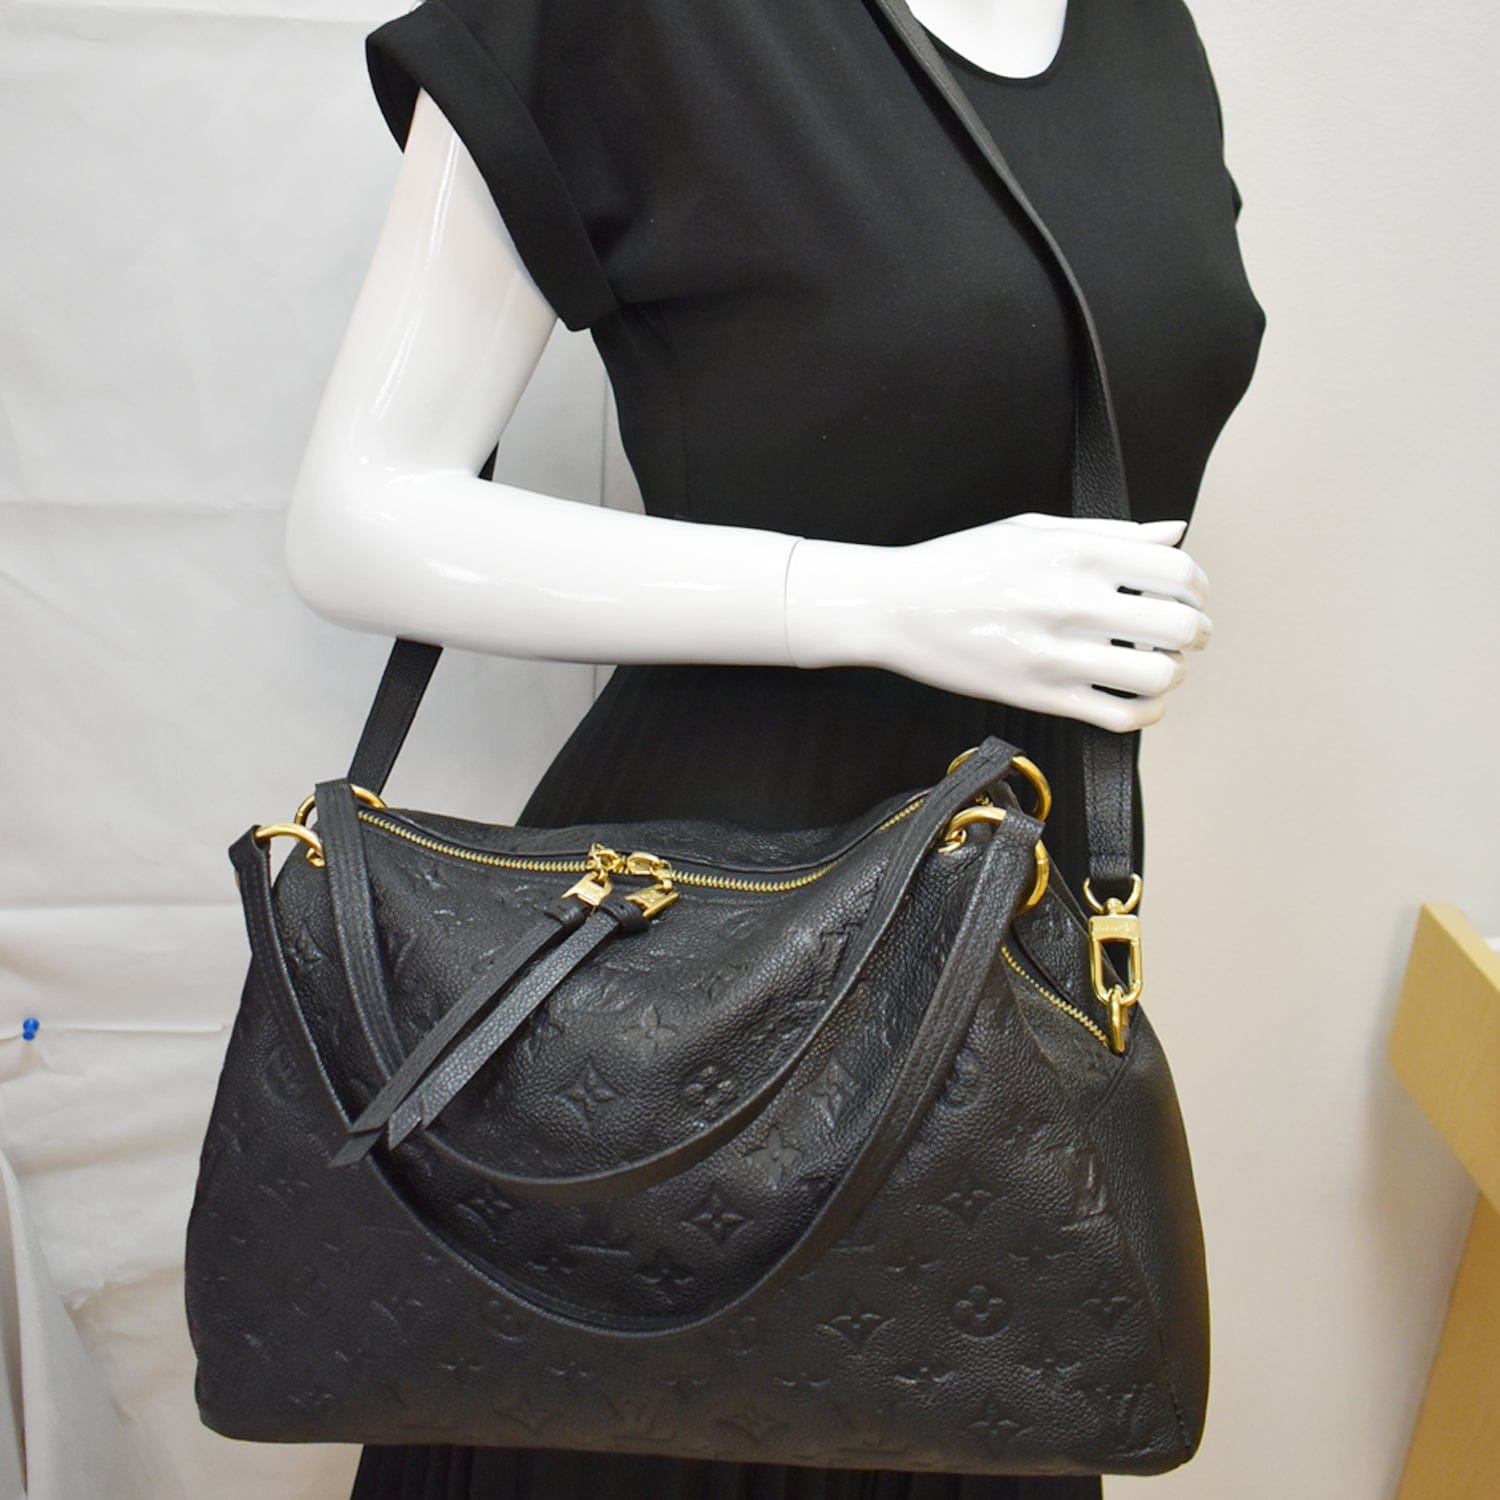 Louis Vuitton Black Monogram Giant Empreinte Leather CarryAll PM